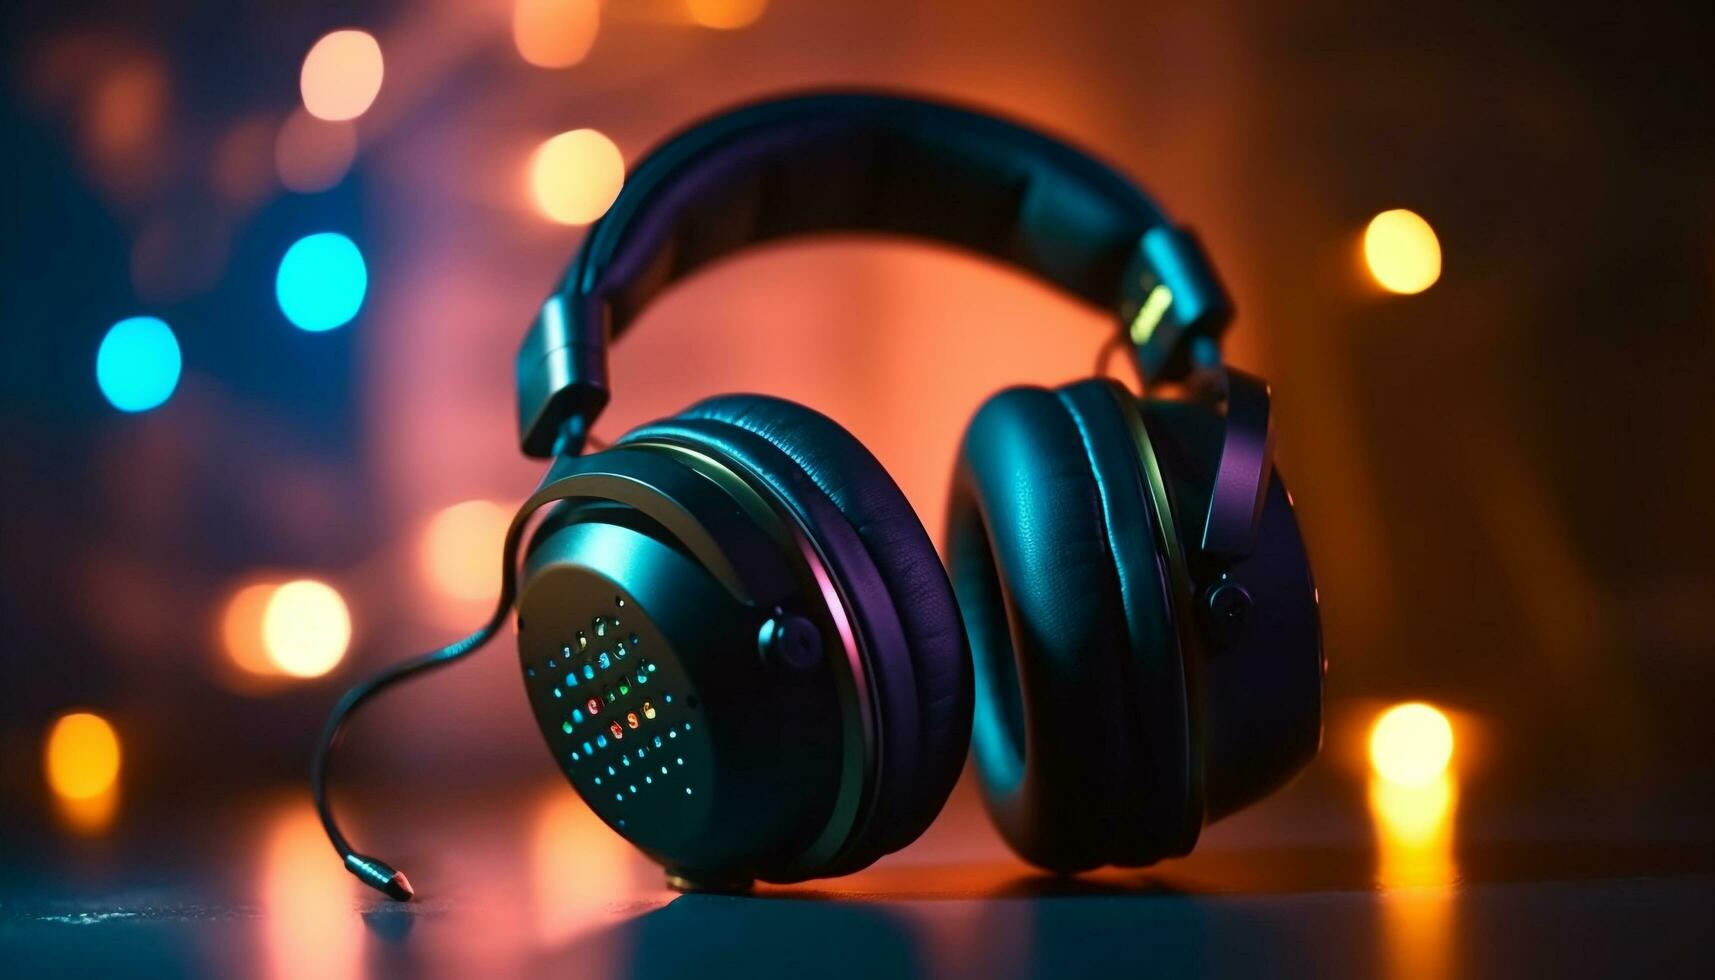 Glowing headphones illuminate the vibrant nightclub scene generated by AI photo